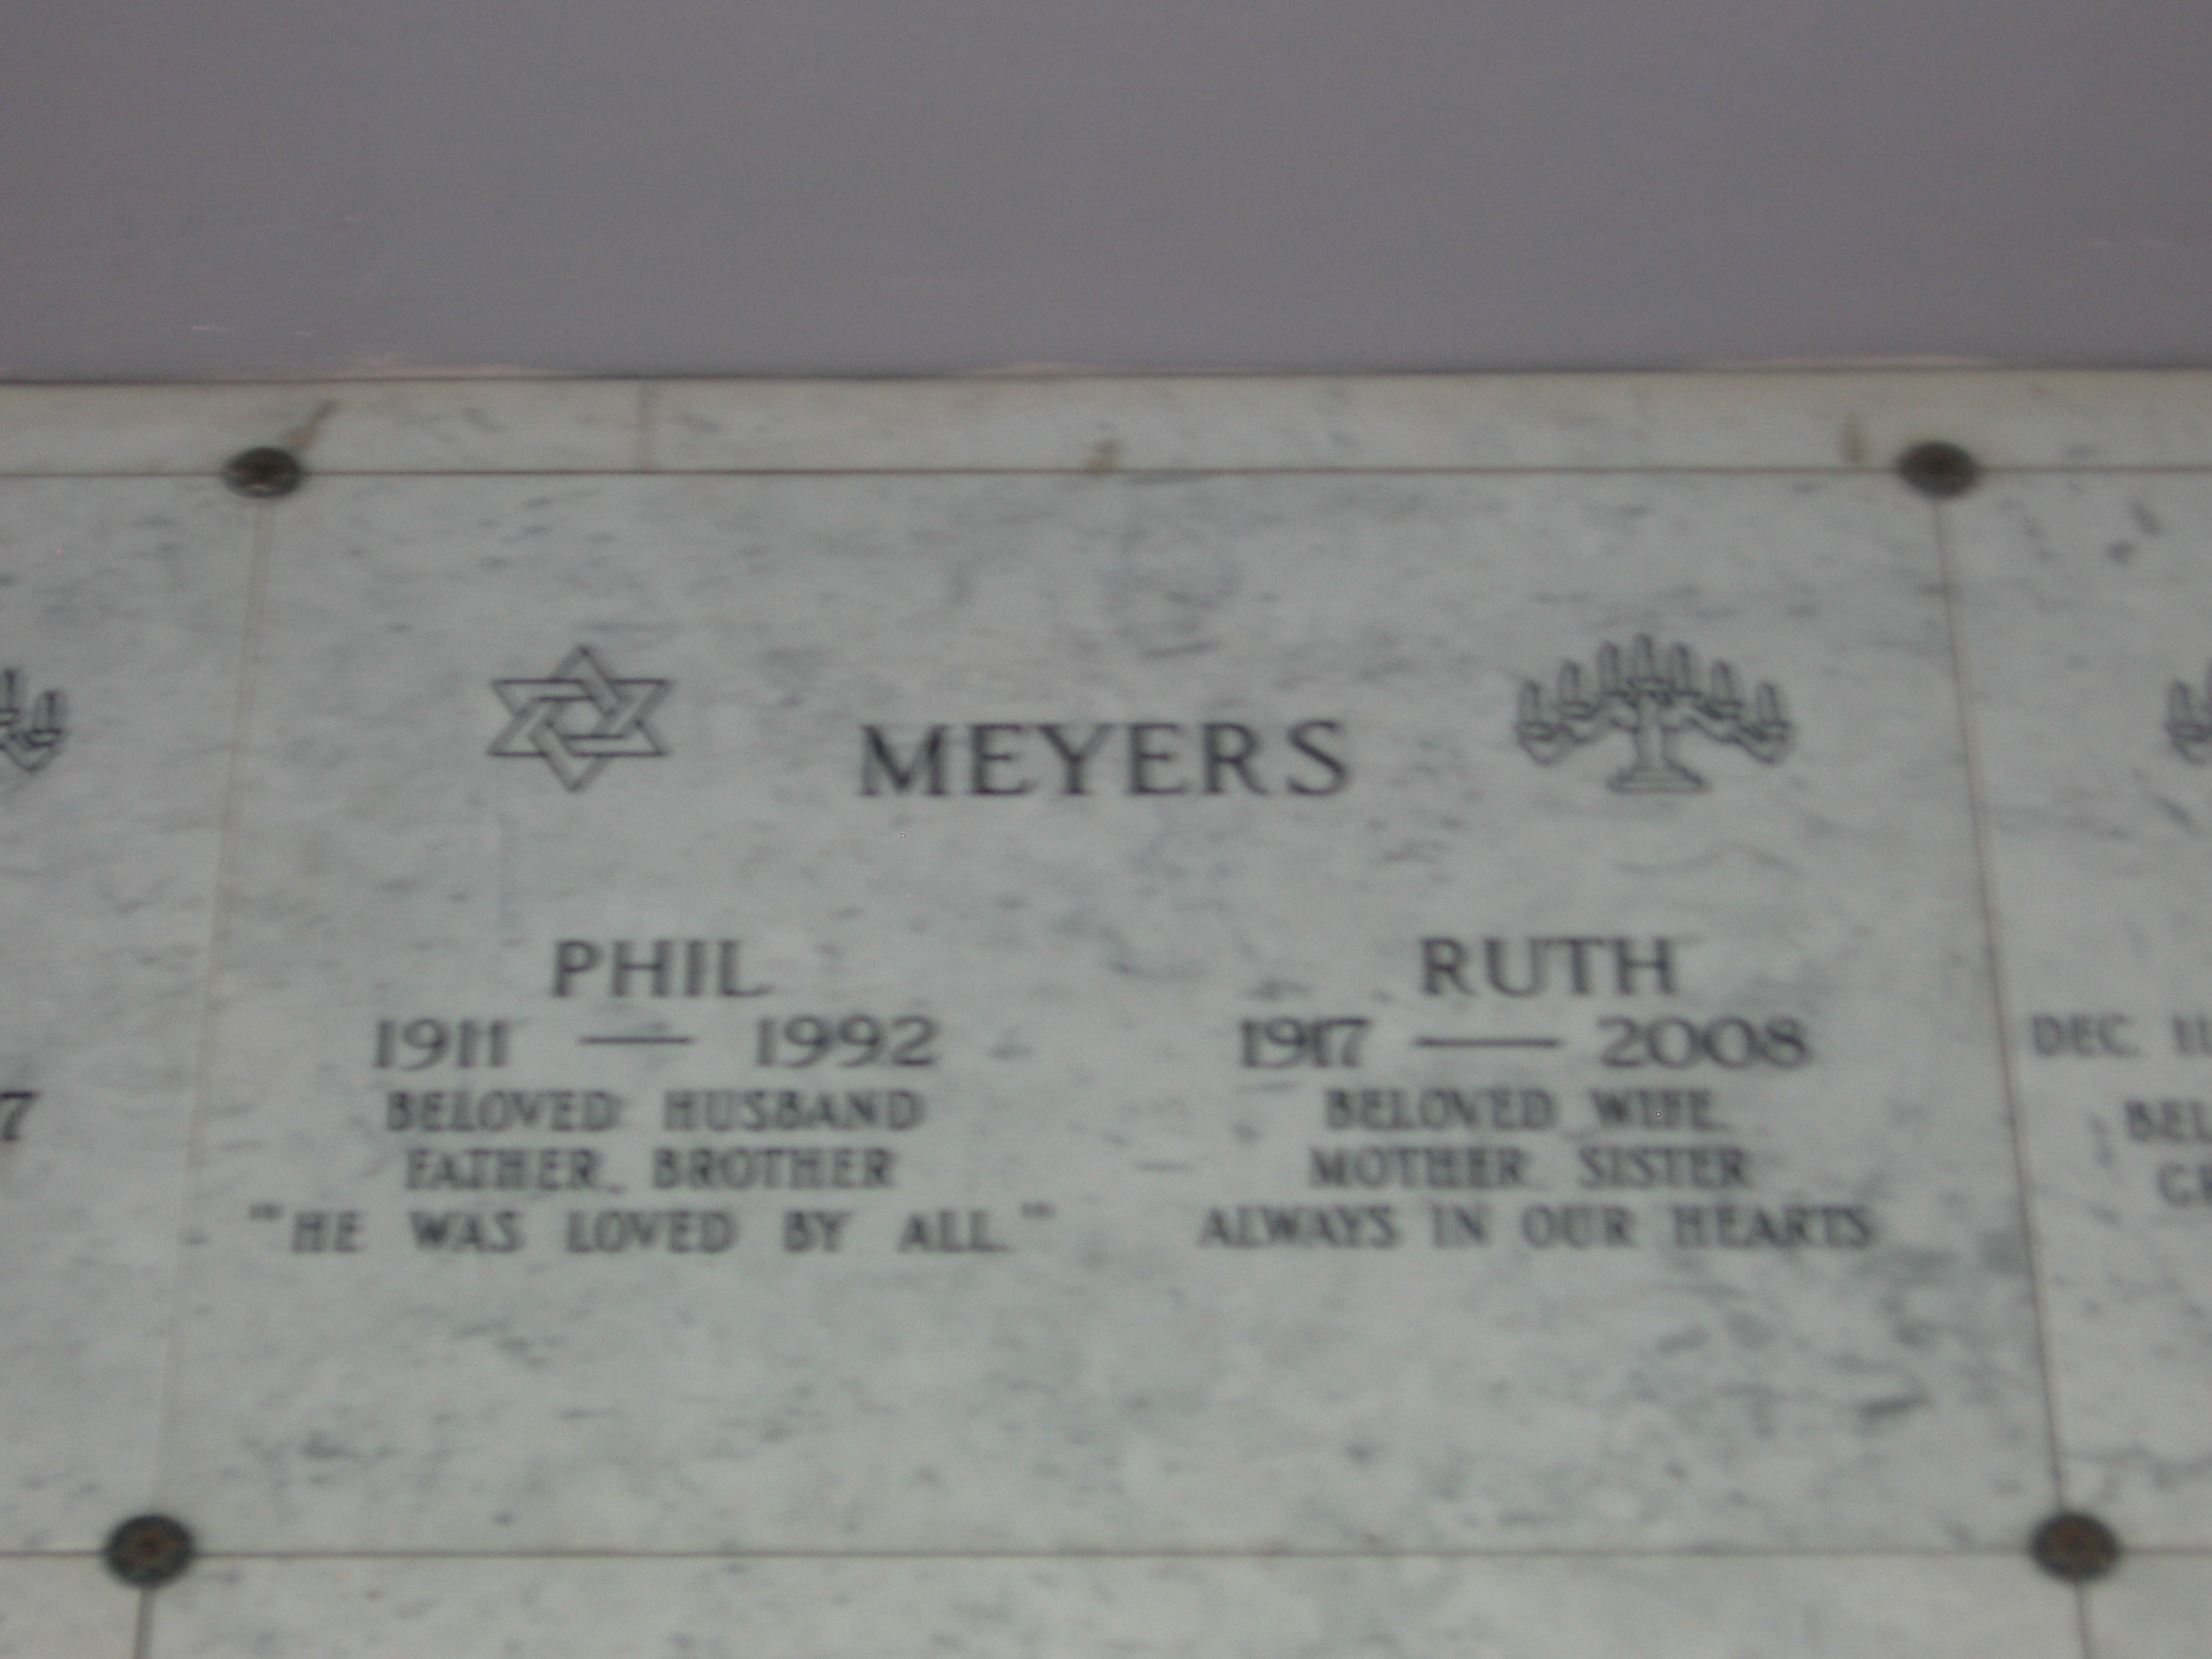 Phil Meyers